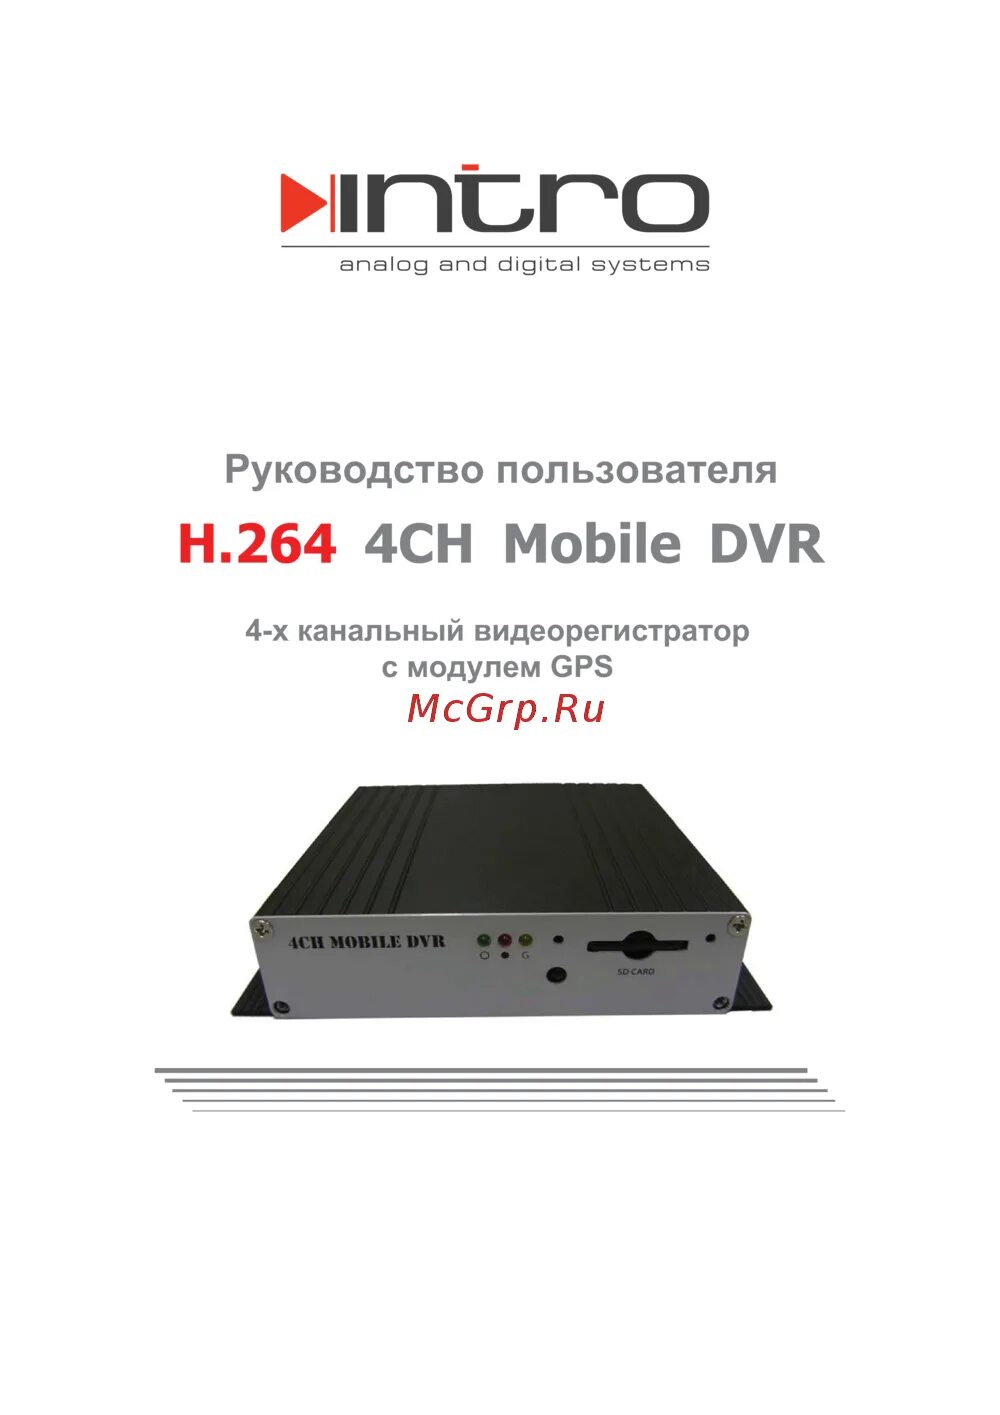 Mobile ch. Intro SDR-g40. Видеорегистратор 4-х канальный. 4ch mobile DVR инструкция. Mobile DVR инструкция.